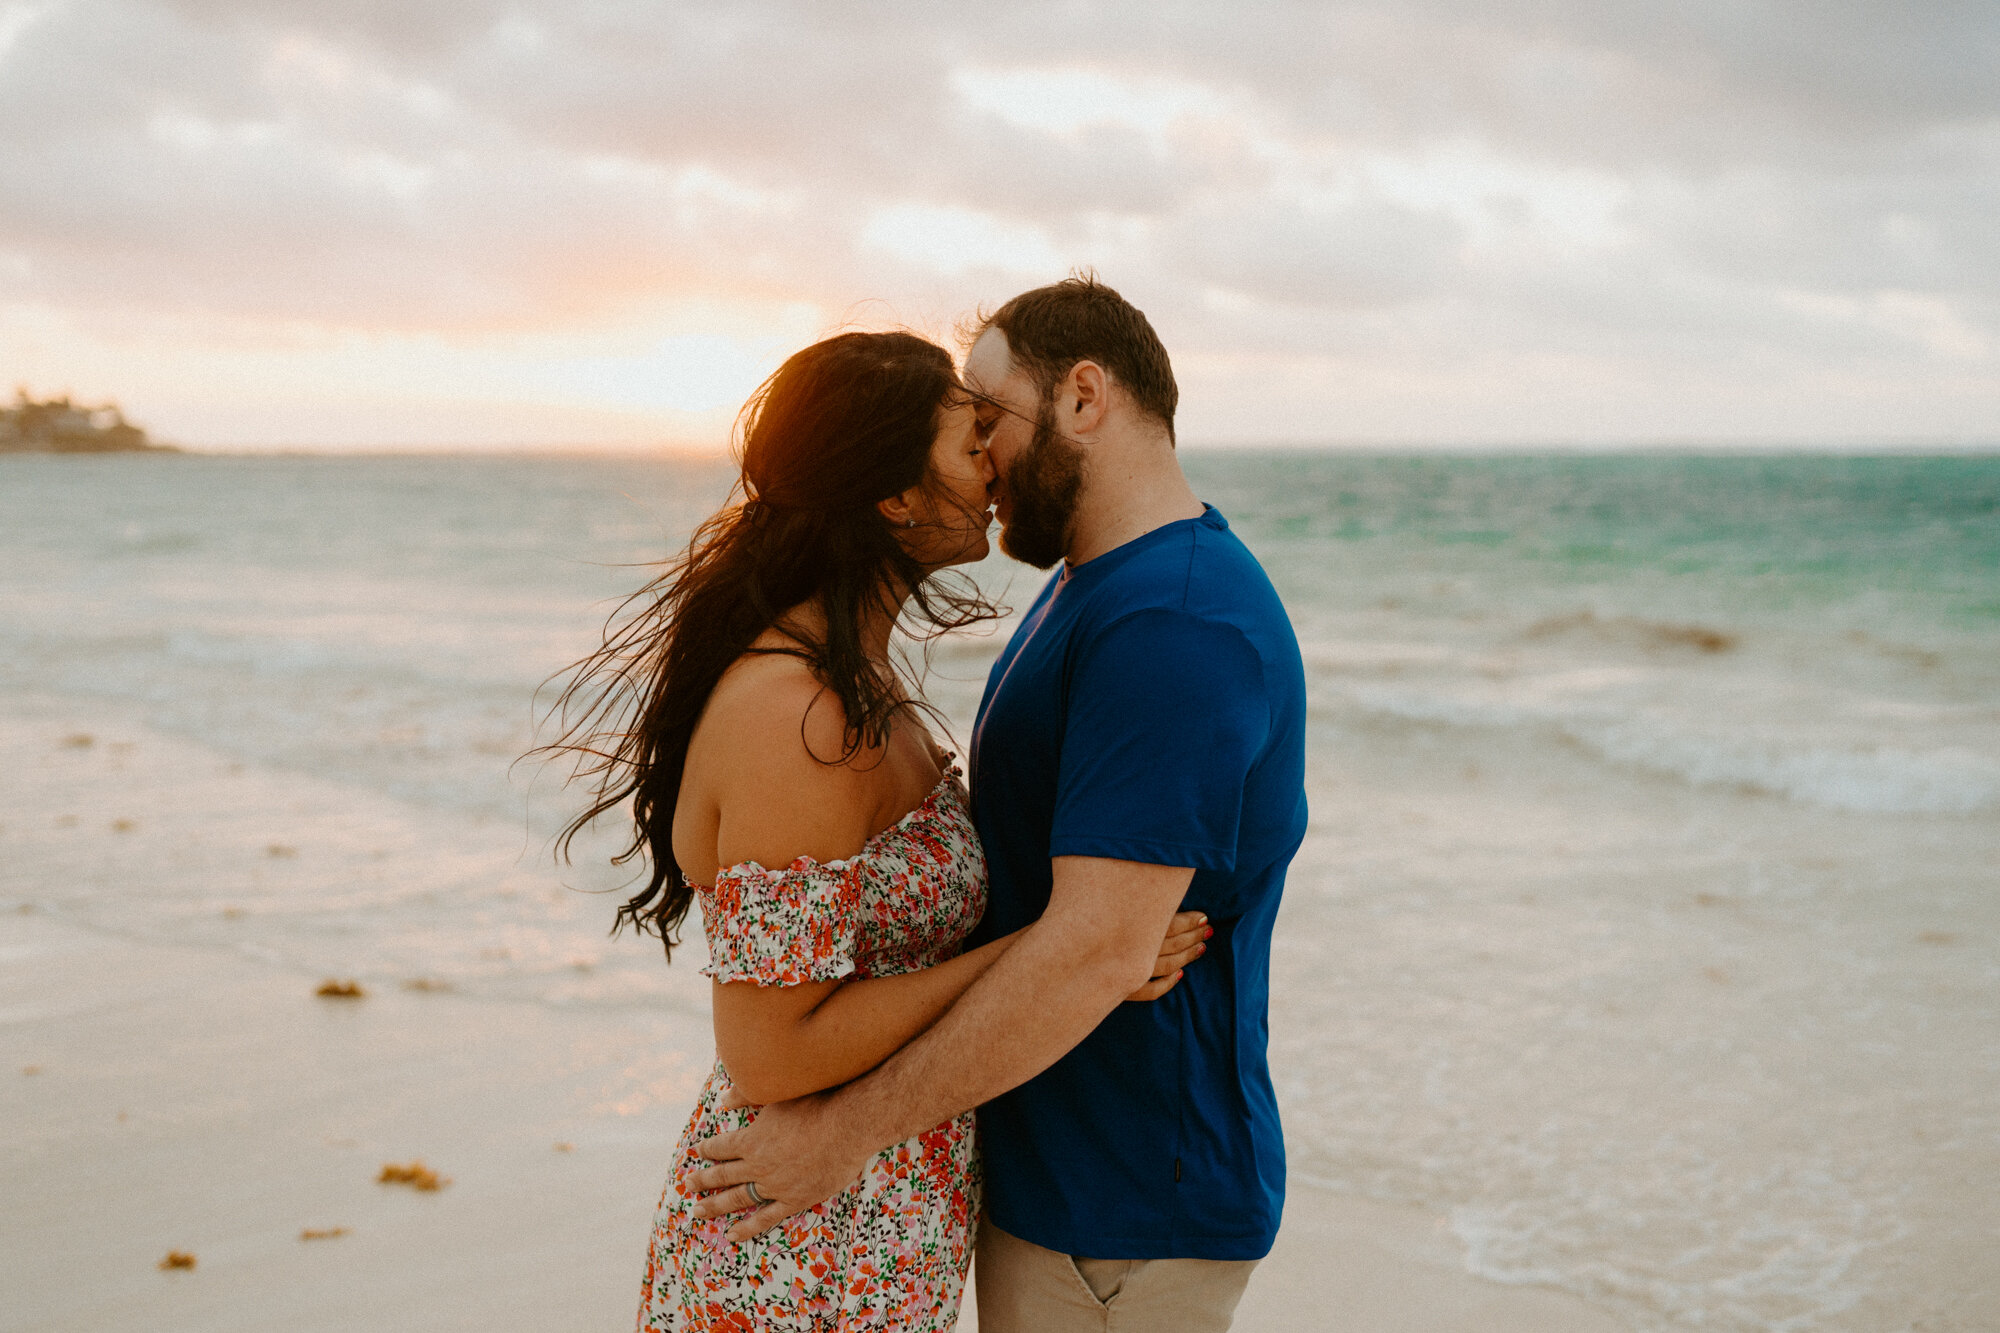 honeymoon session at sunrise on the beach riviera maya mexico